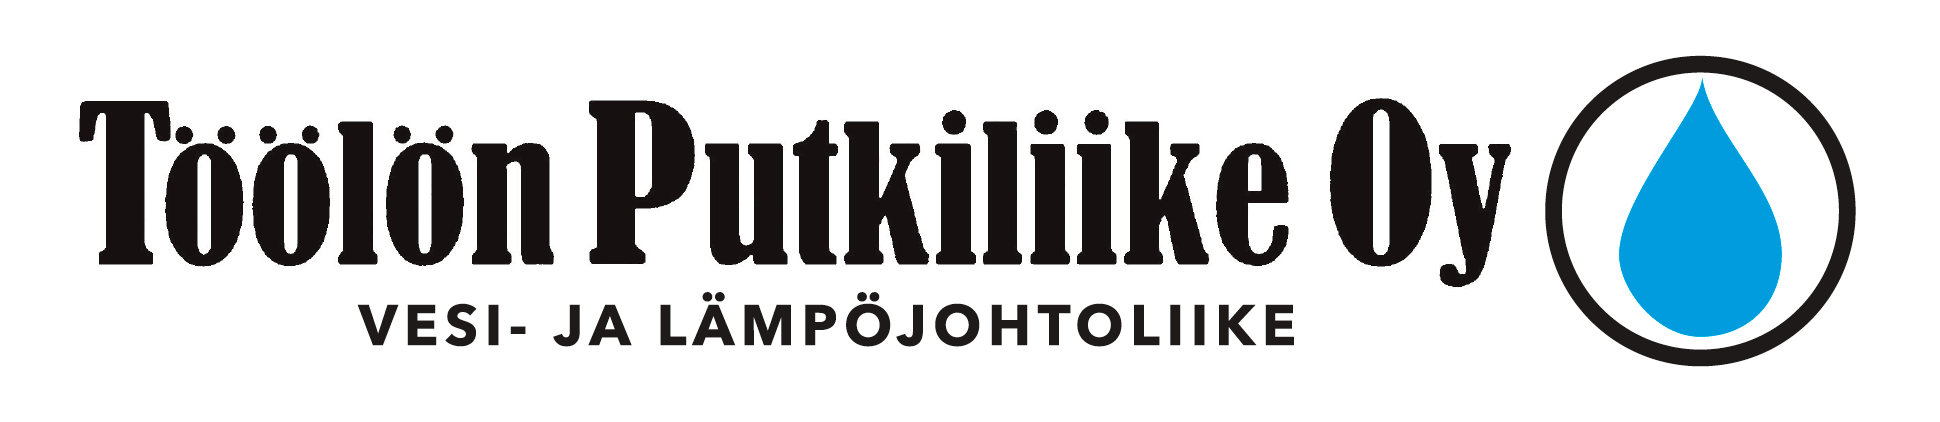 Töölön_Putkil_logo_1